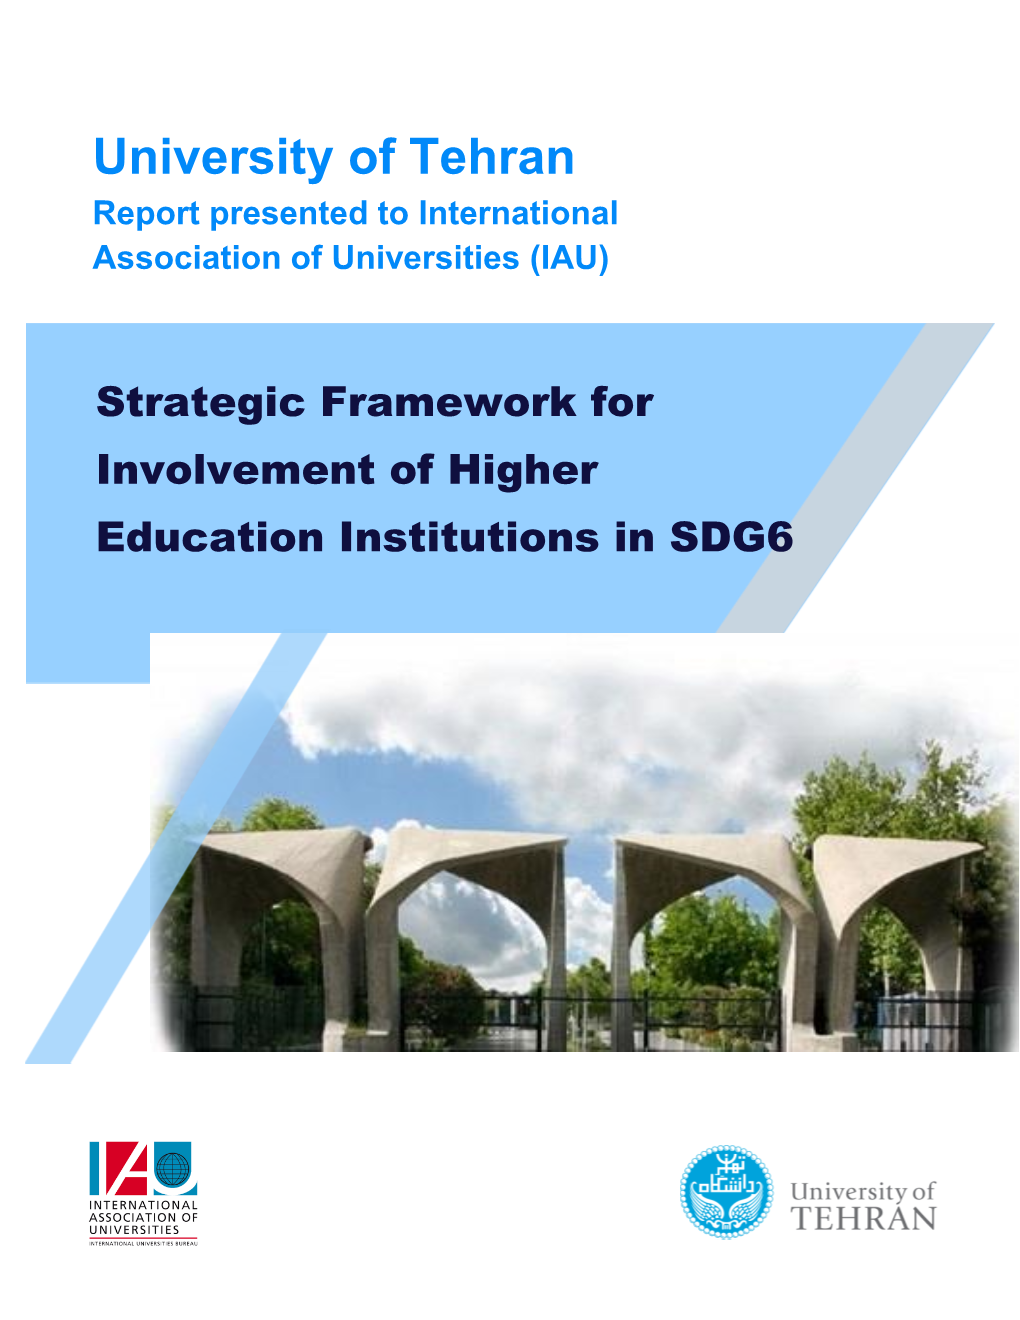 University of Tehran Report Presented to International Association of Universities (IAU)